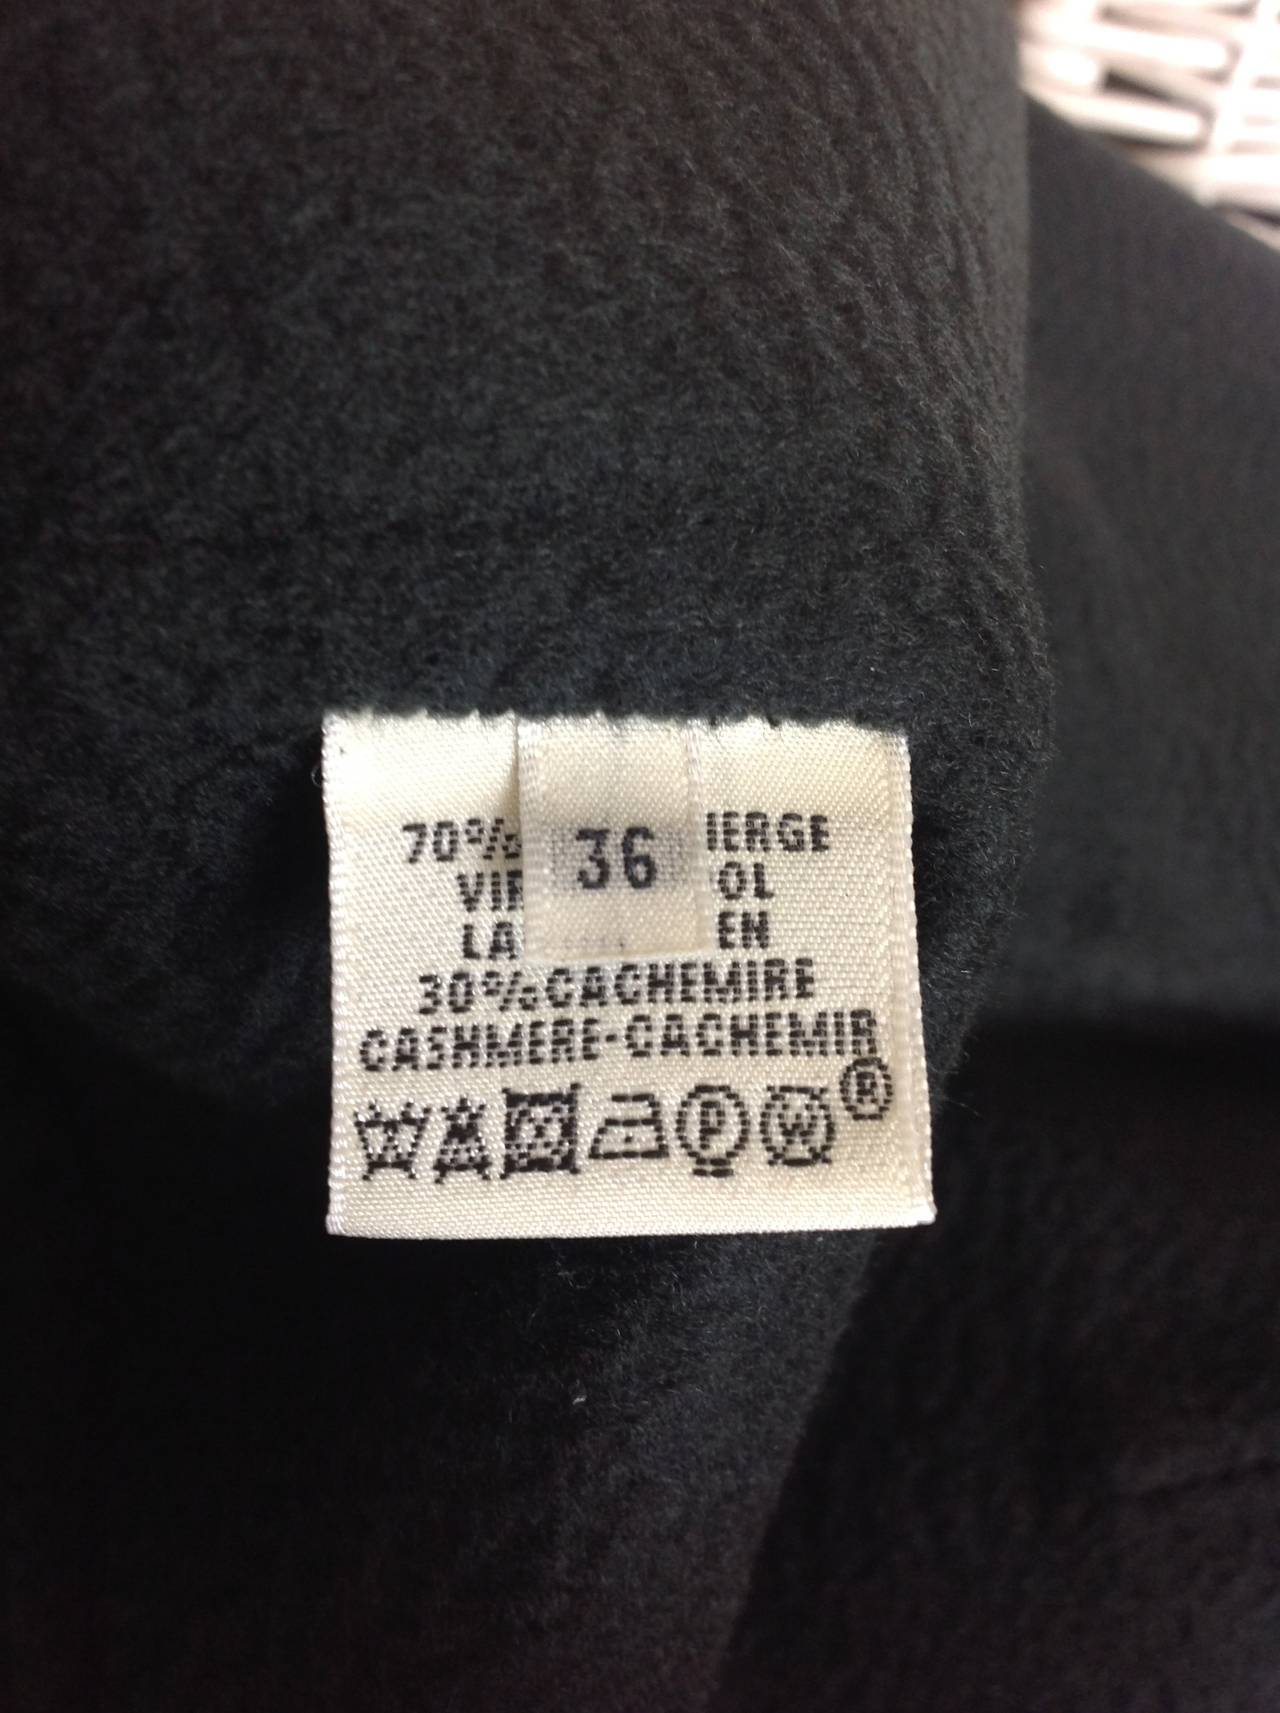 Hermes spruce green collarless cardigan jacket                           Size 36 1